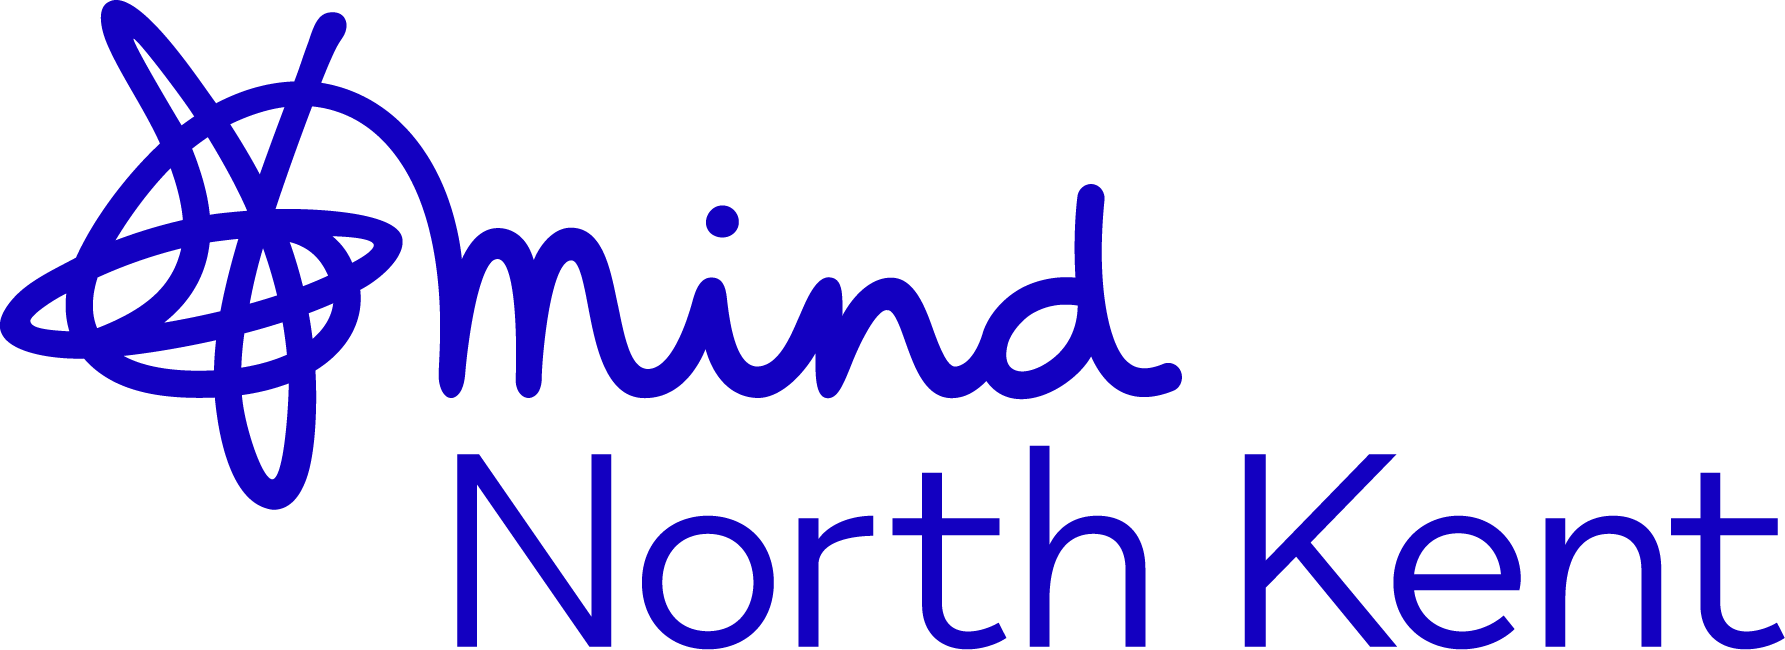 Mind North Kent